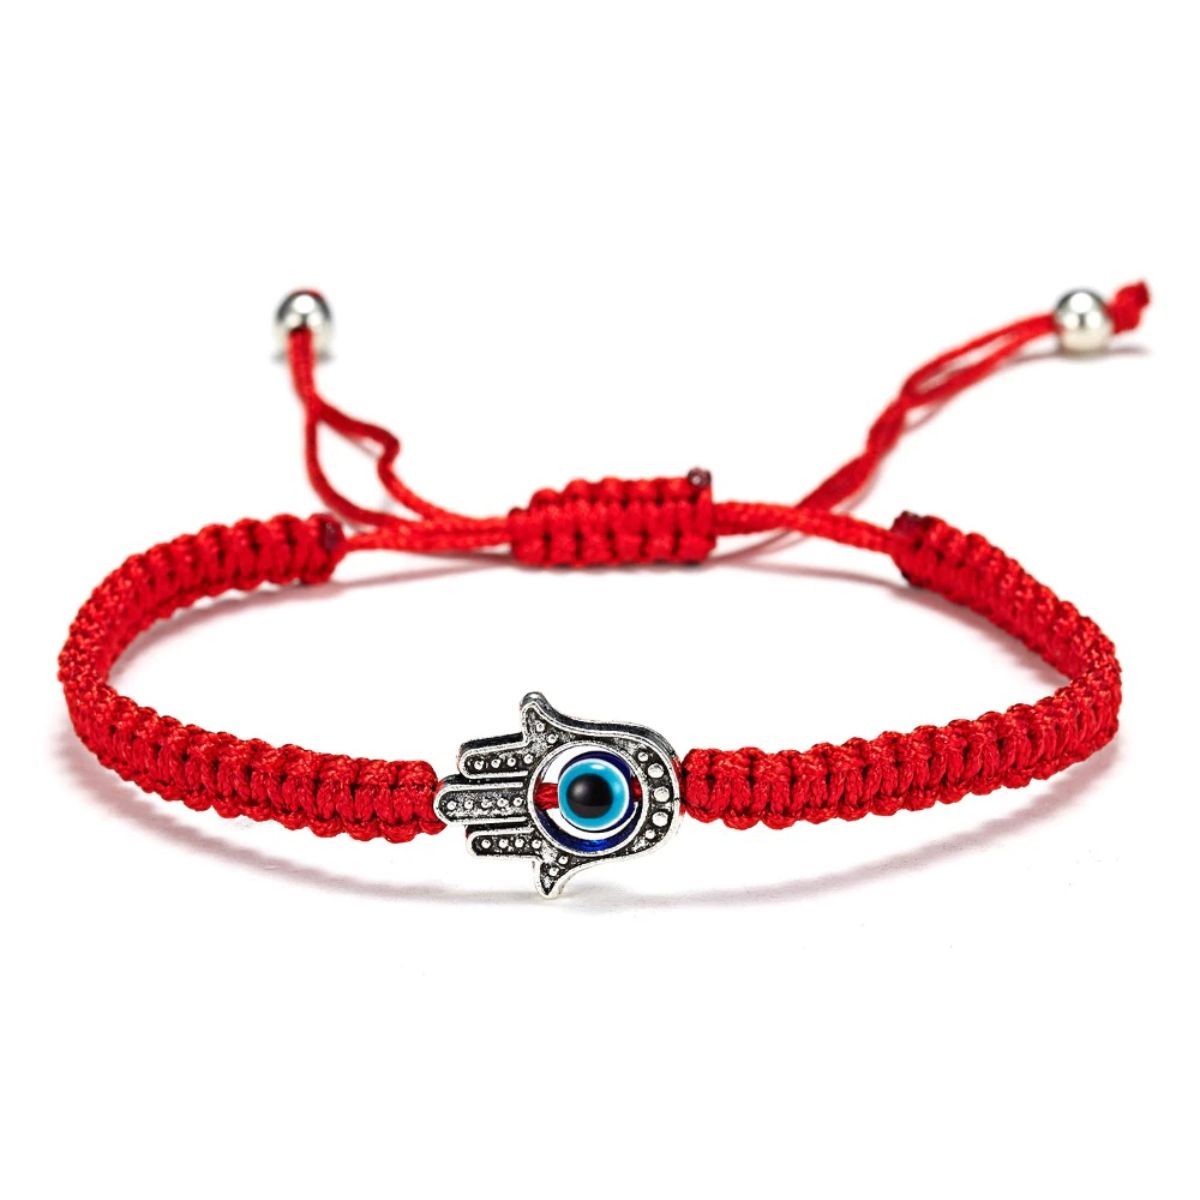 Buy 7 Knots Red Protection Bracelet Red String Bracelet Online in India   Etsy